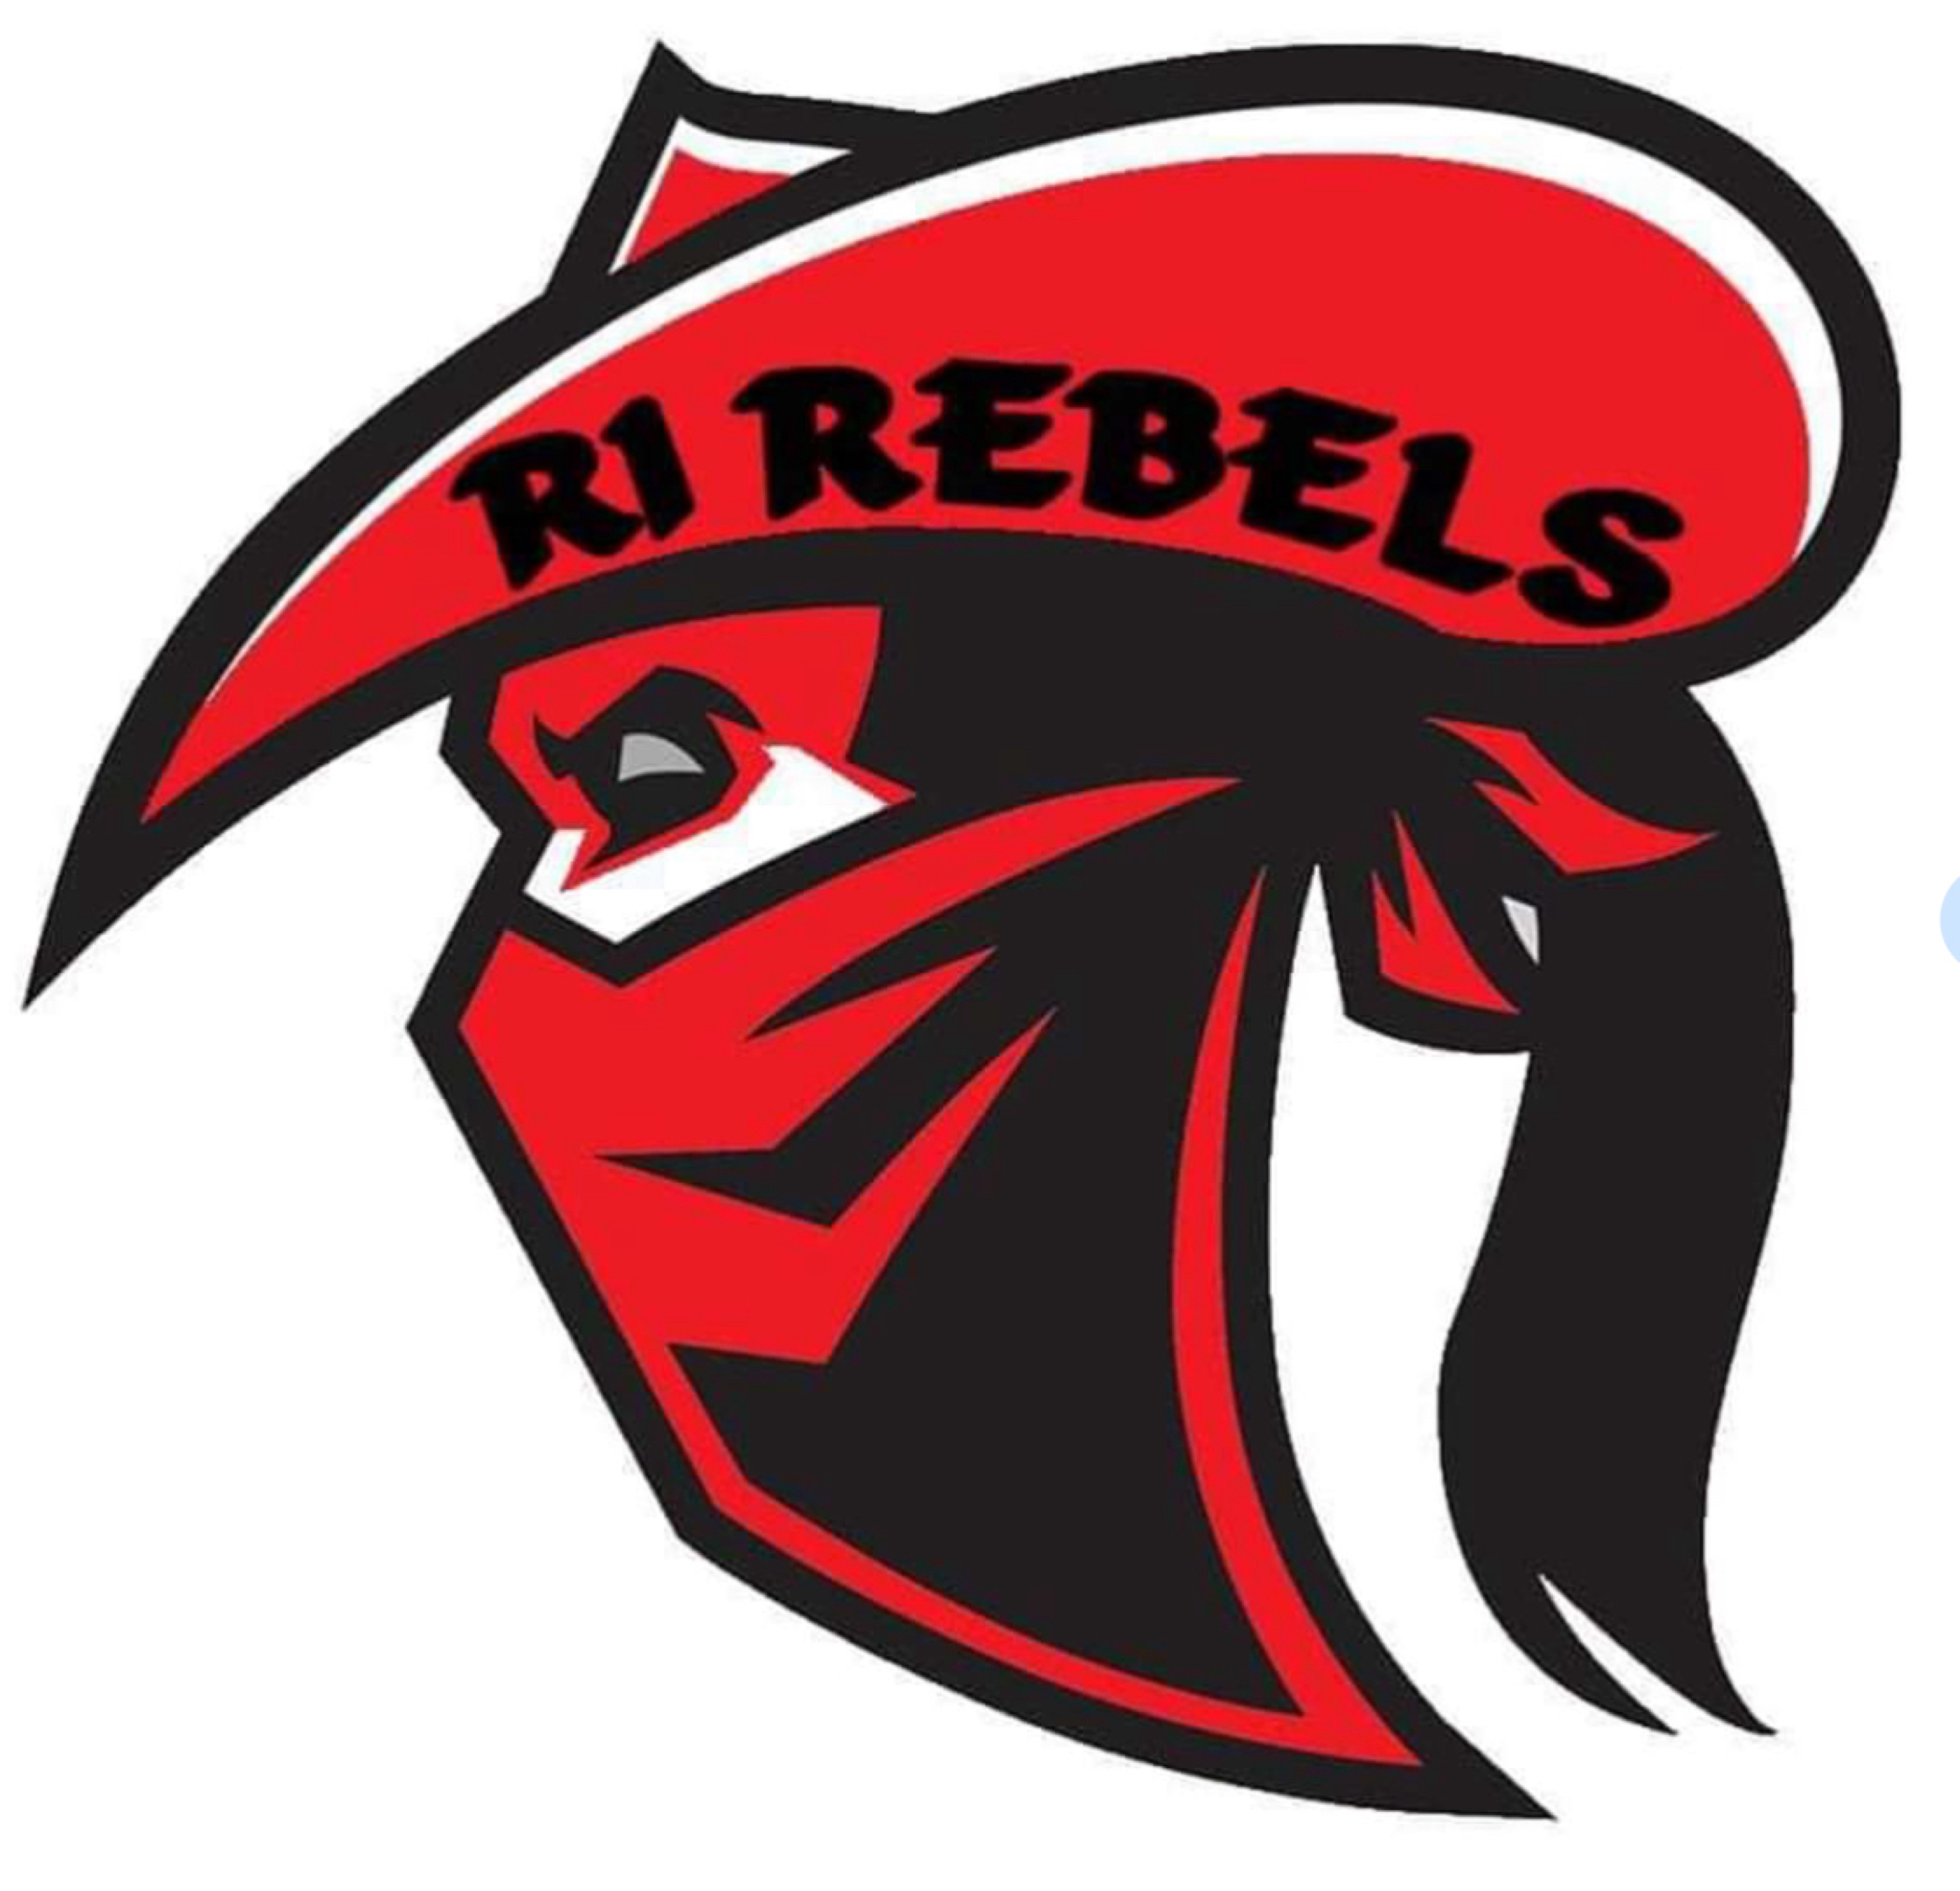 Rhode Island Rebels, LLC Logo